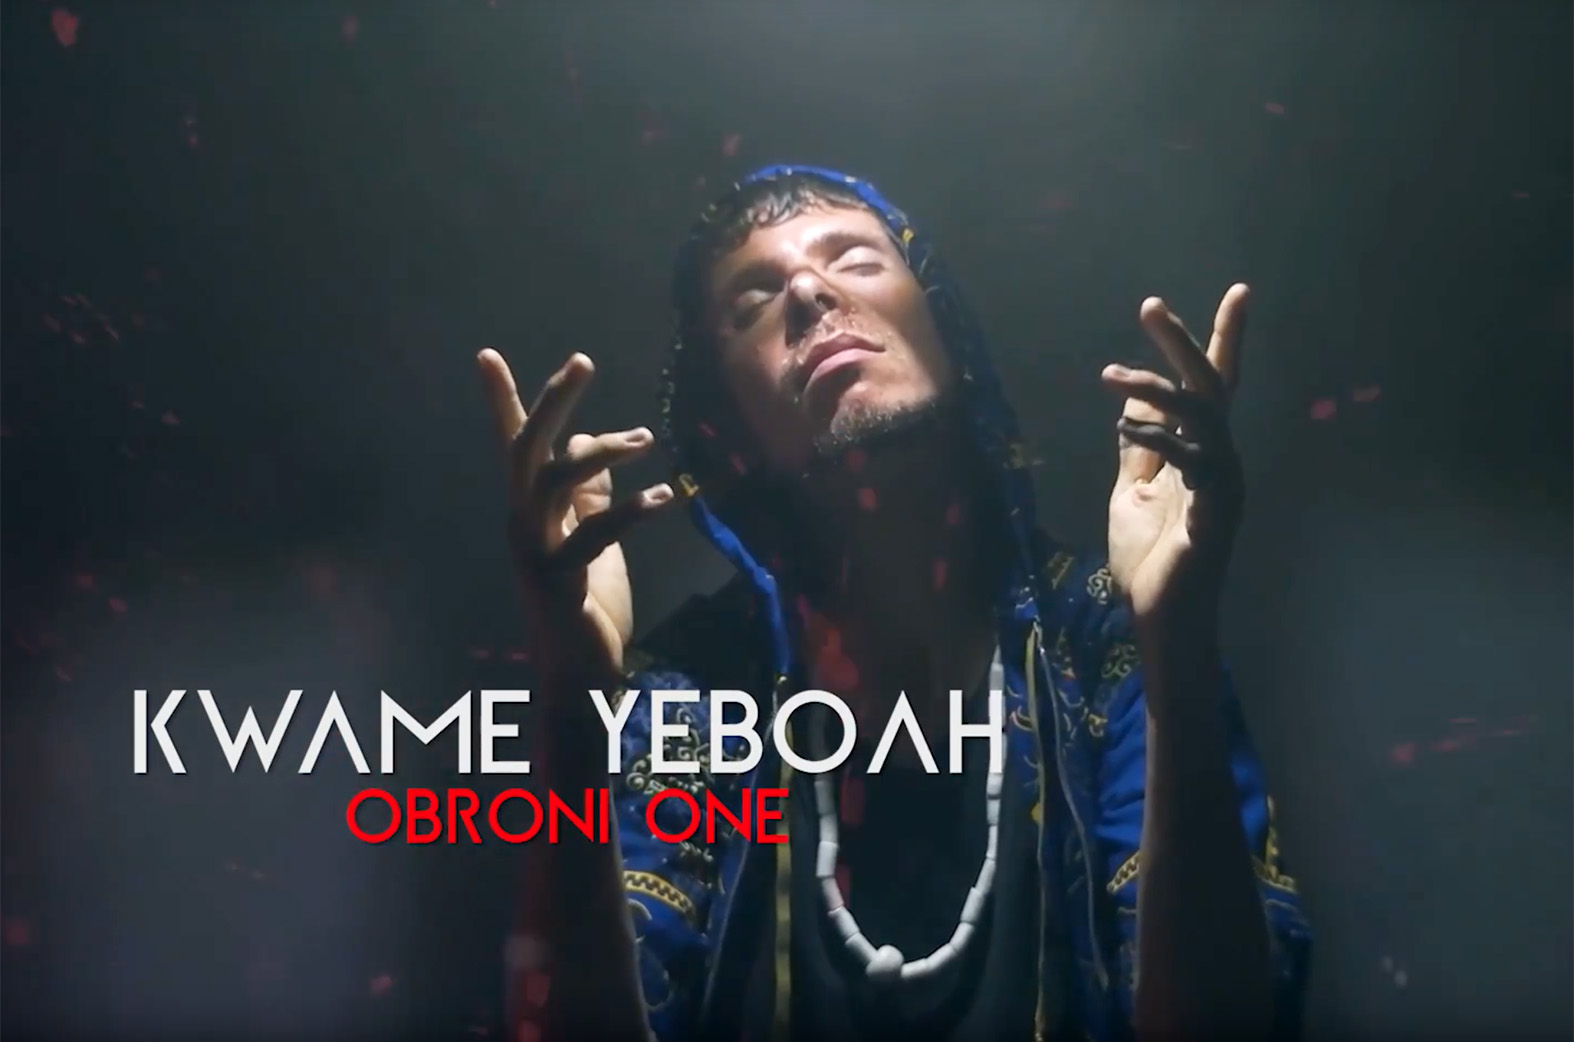 Video: Addicted by Kwame Yeboah (Obroni One)